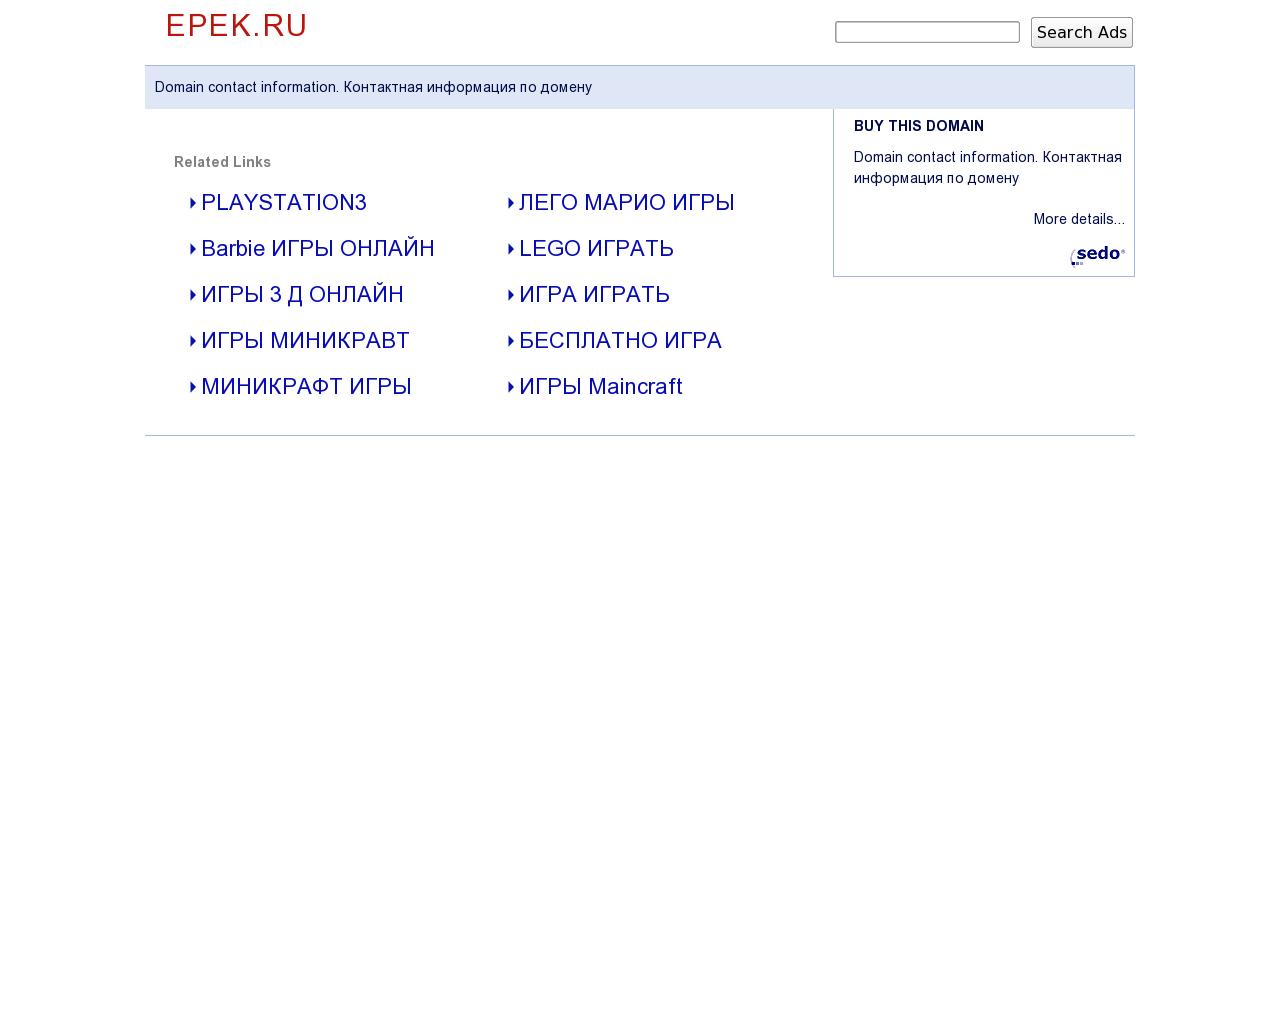 Изображение сайта epek.ru в разрешении 1280x1024